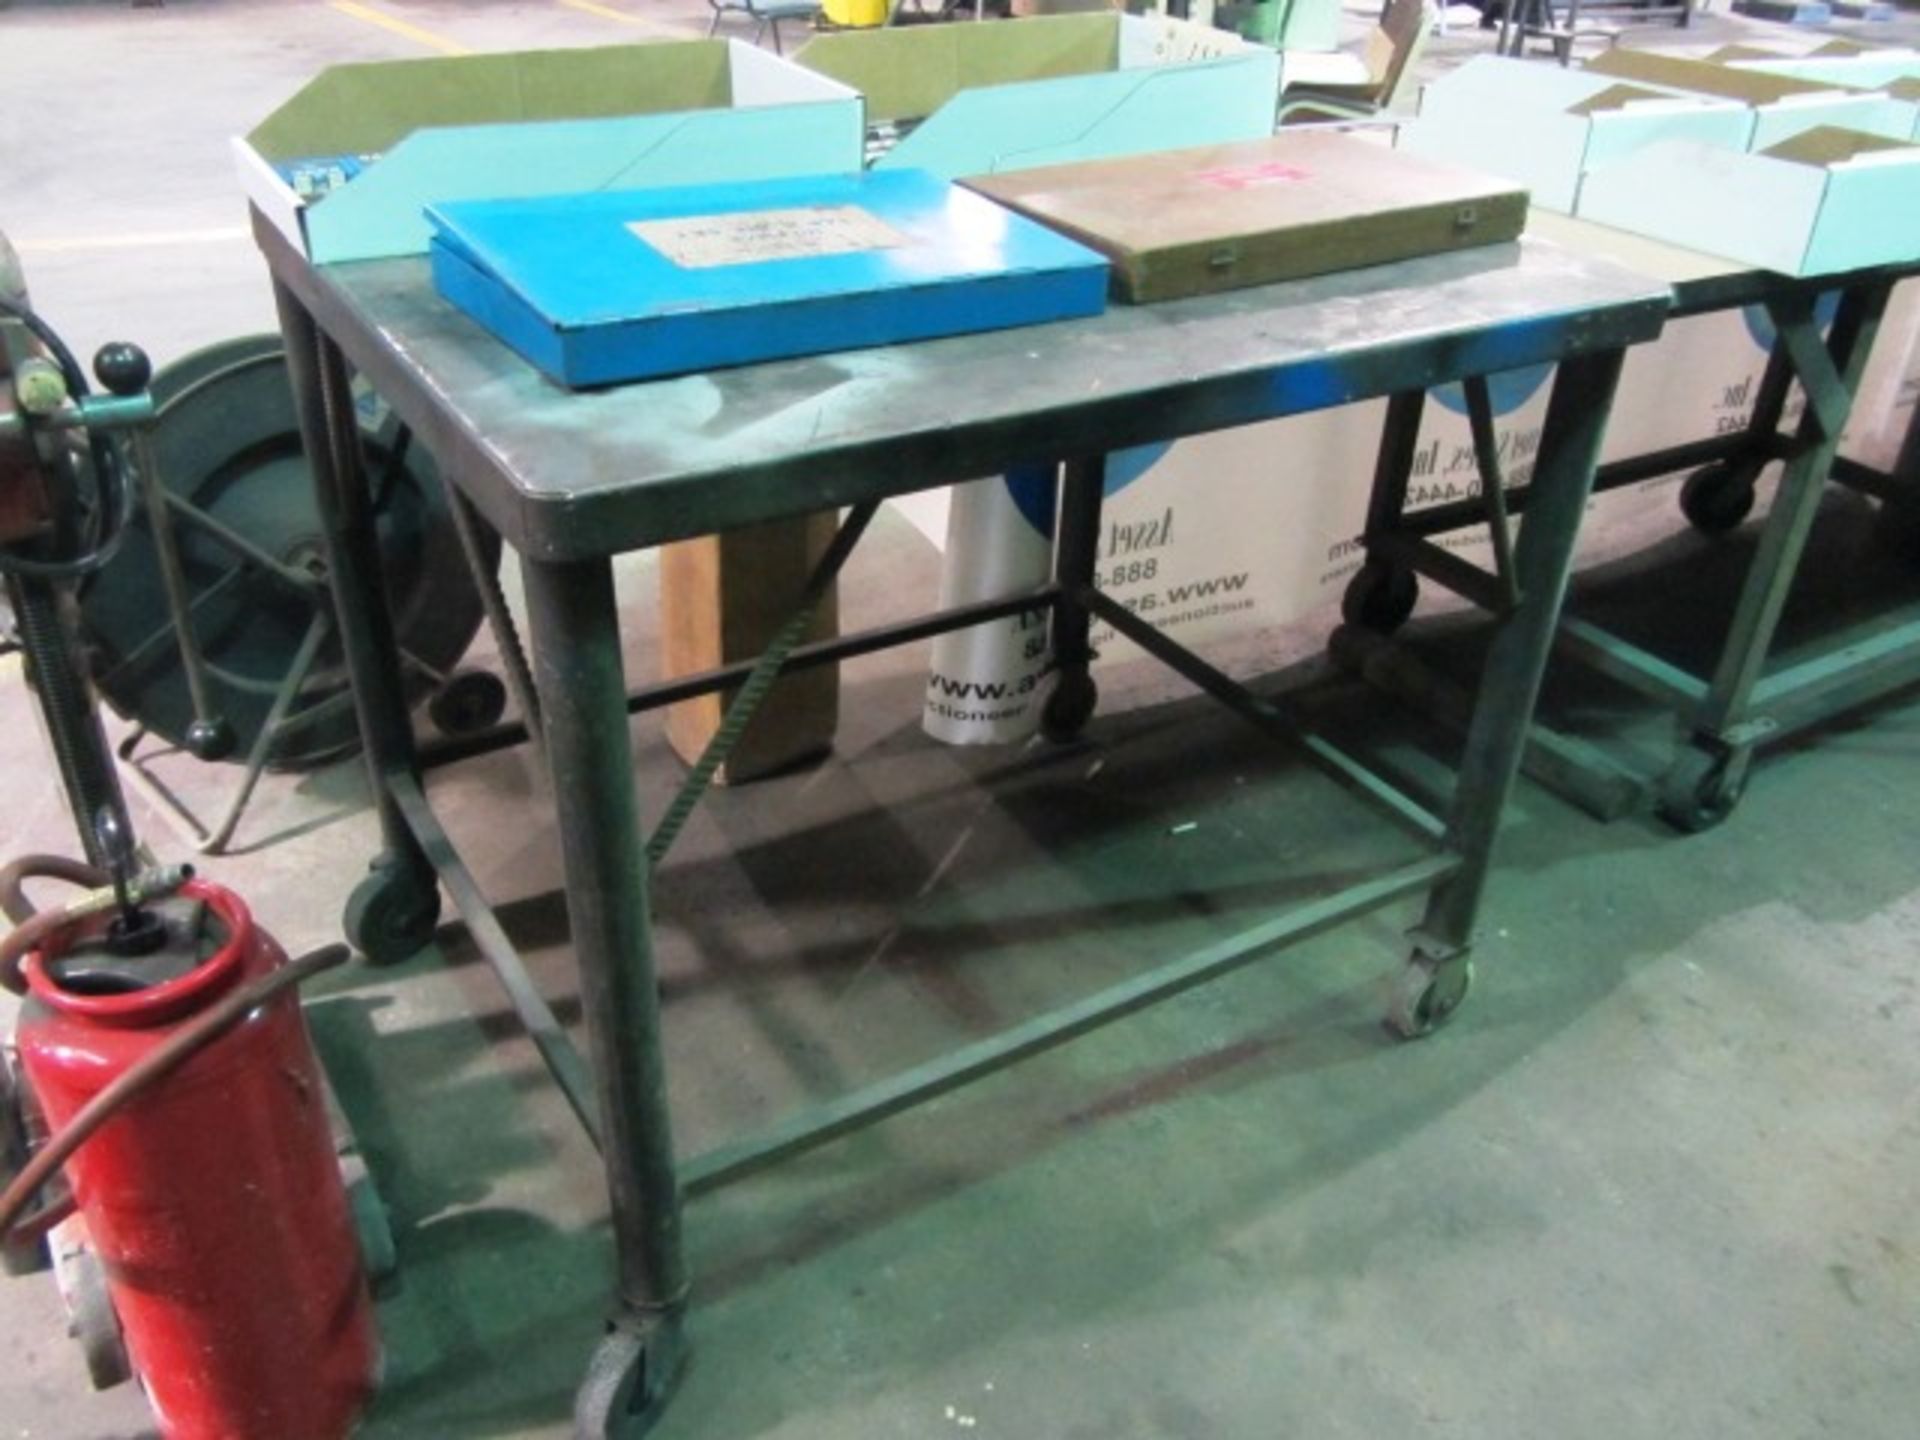 Portable Steel Table